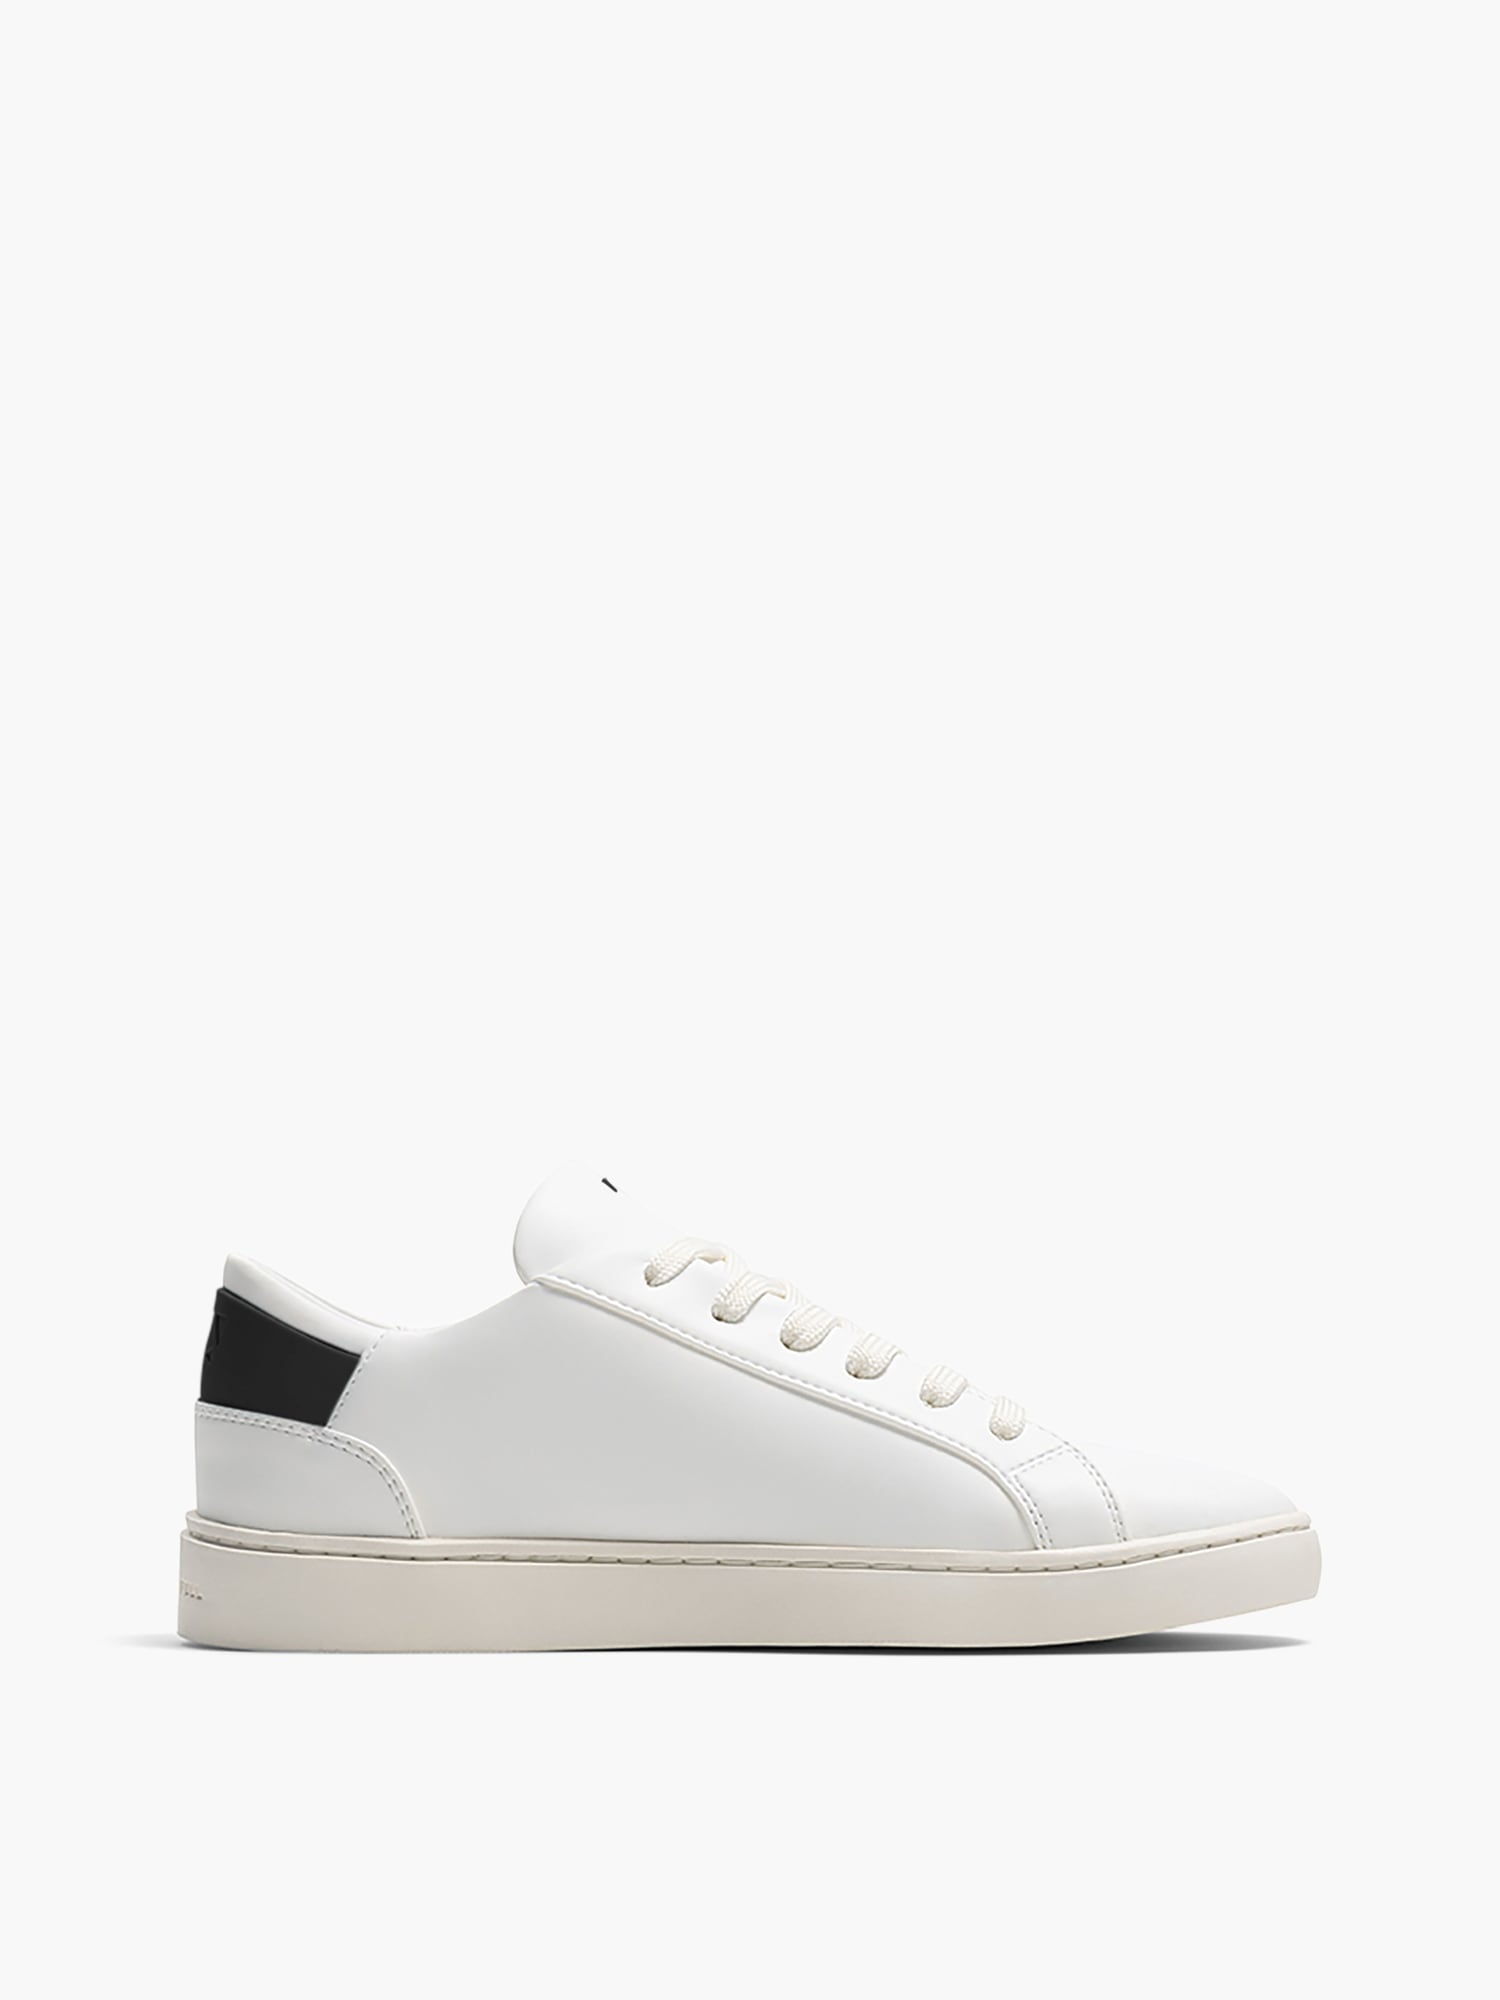 Zara White Platform Sneaker | White platform sneakers, Platform sneakers  outfit, Chunky boots outfit